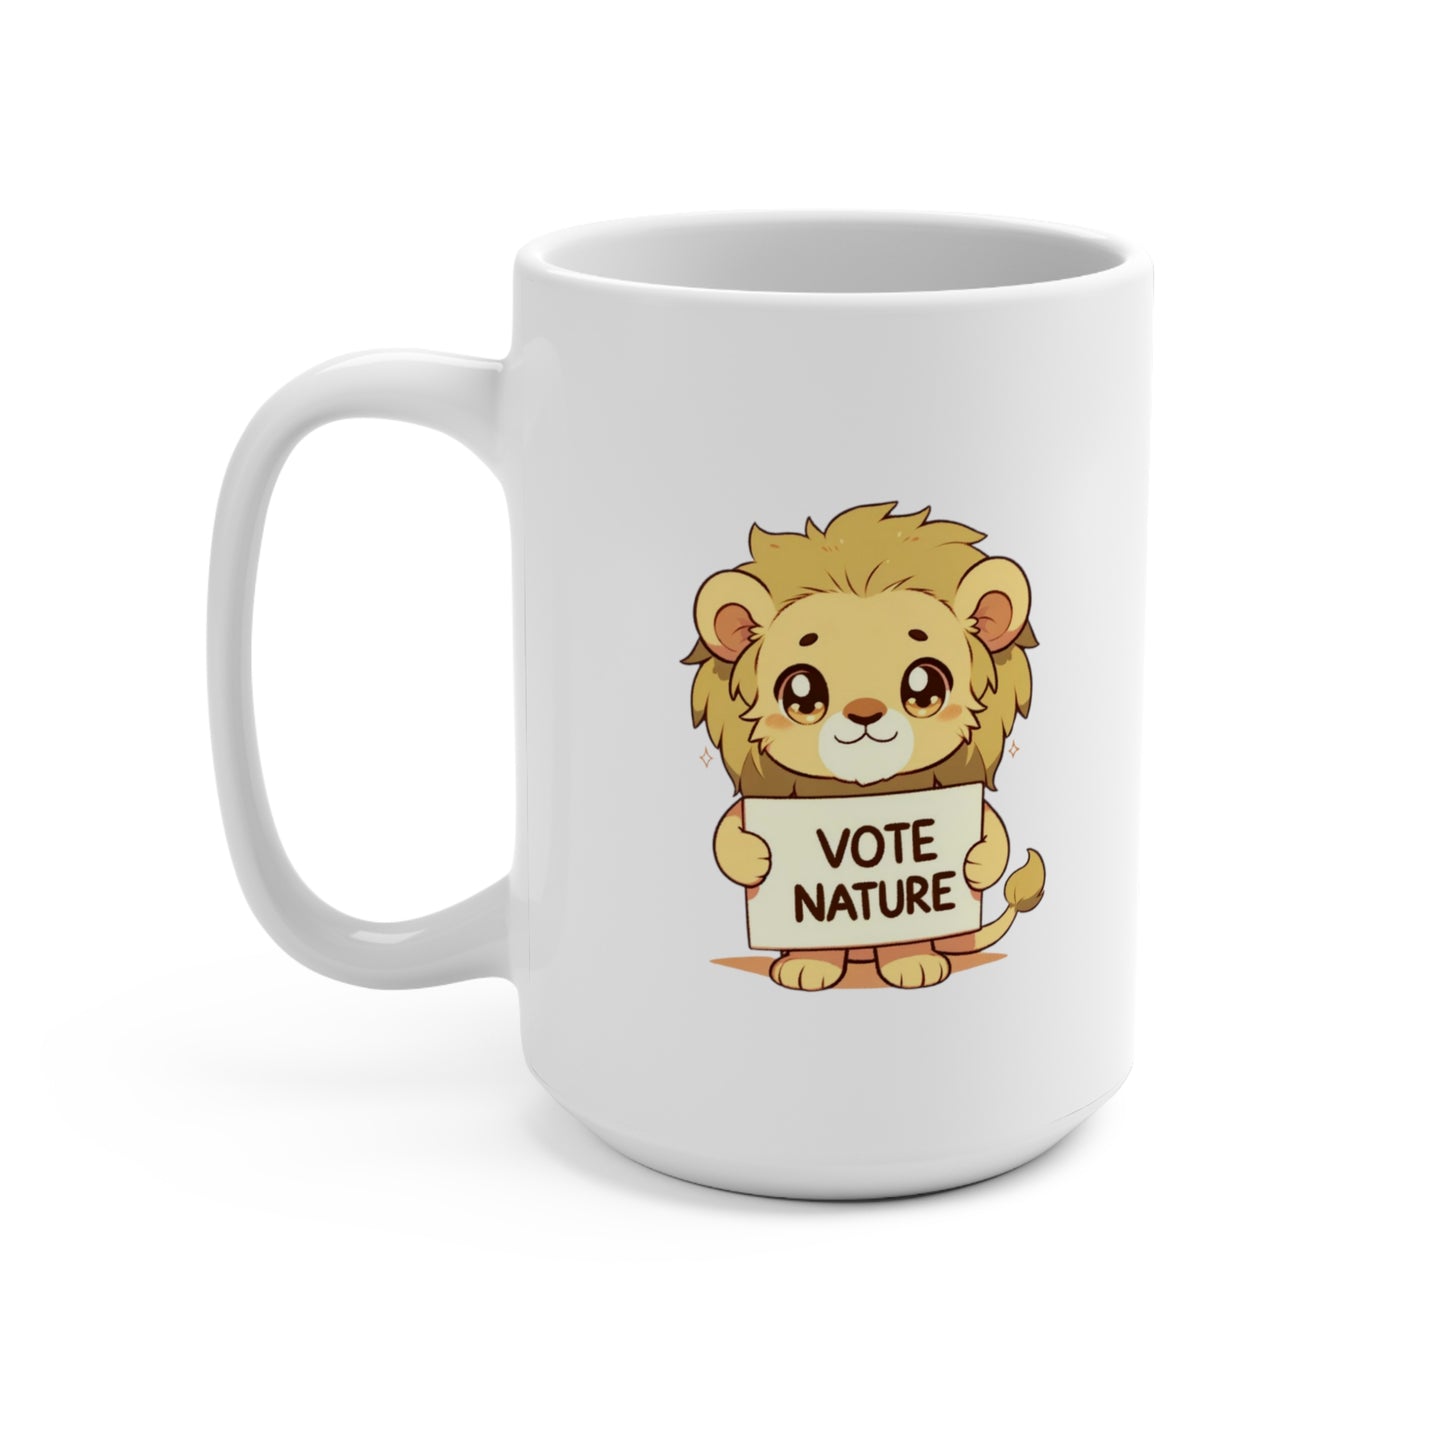 Inspirational Cute Lion Statement Coffee Mug (15oz): Vote Nature! Be a cute activist bunny!